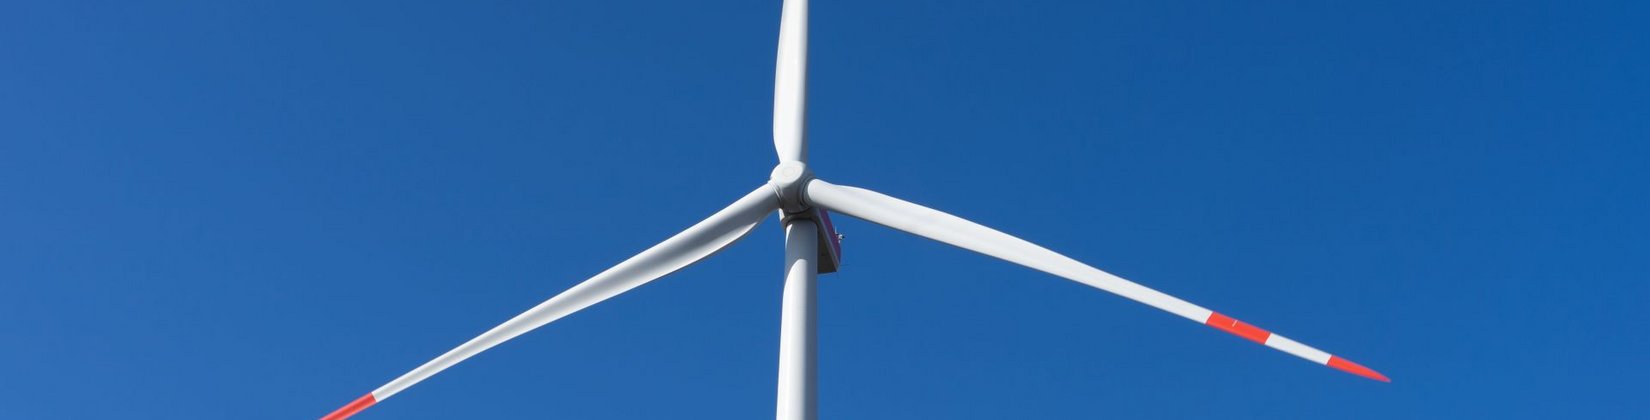 Windenergieanlage Verenafohren © Plattform EE BW, A. Jung